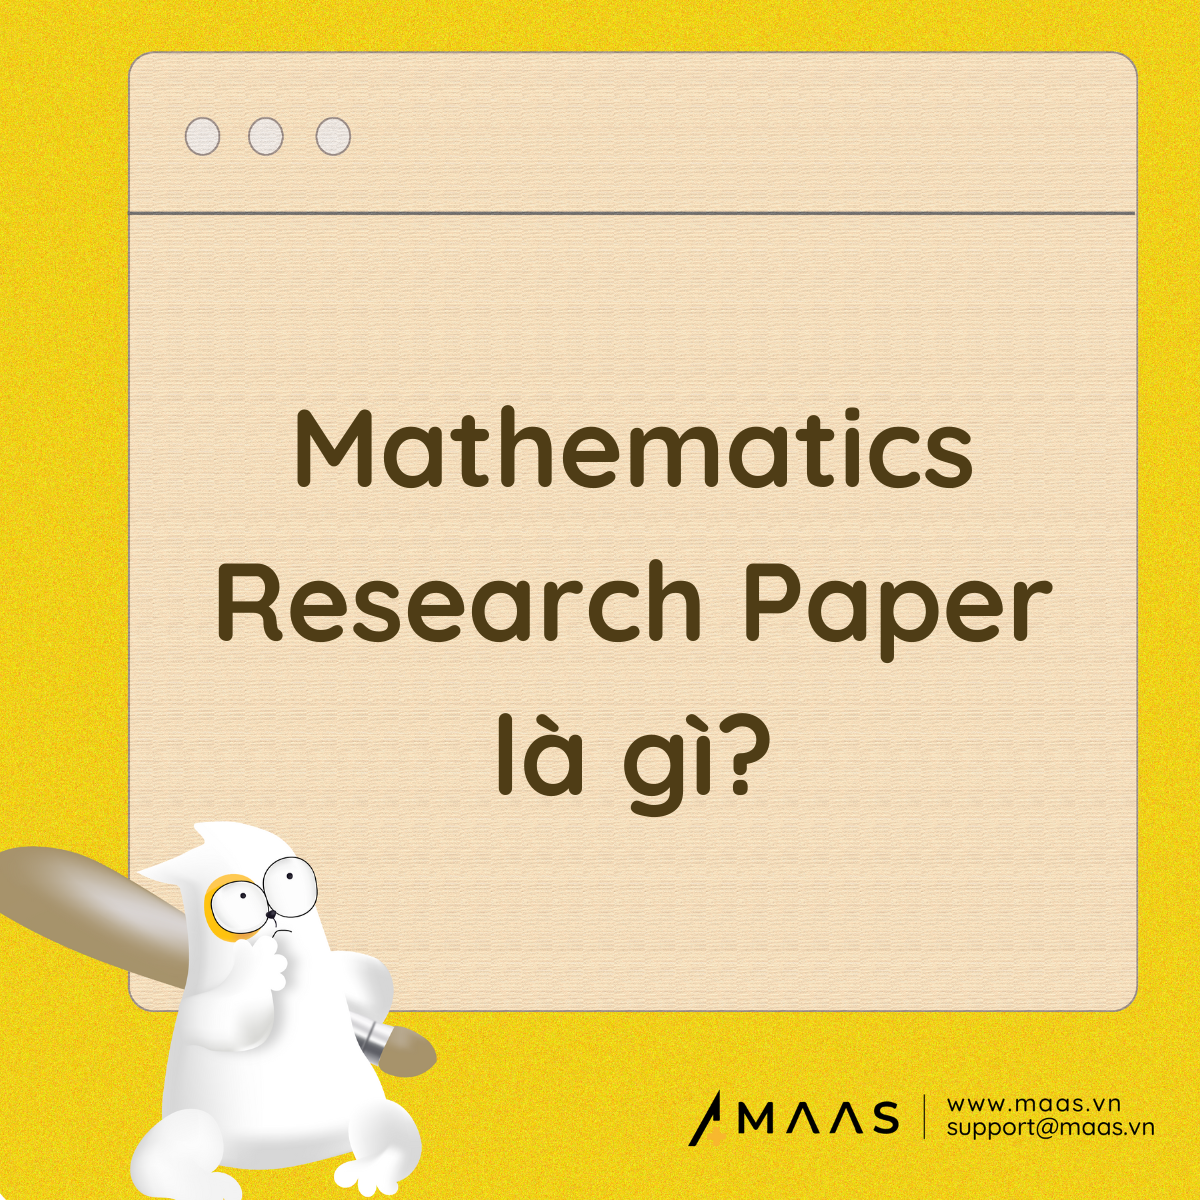 Mathematics Research Paper